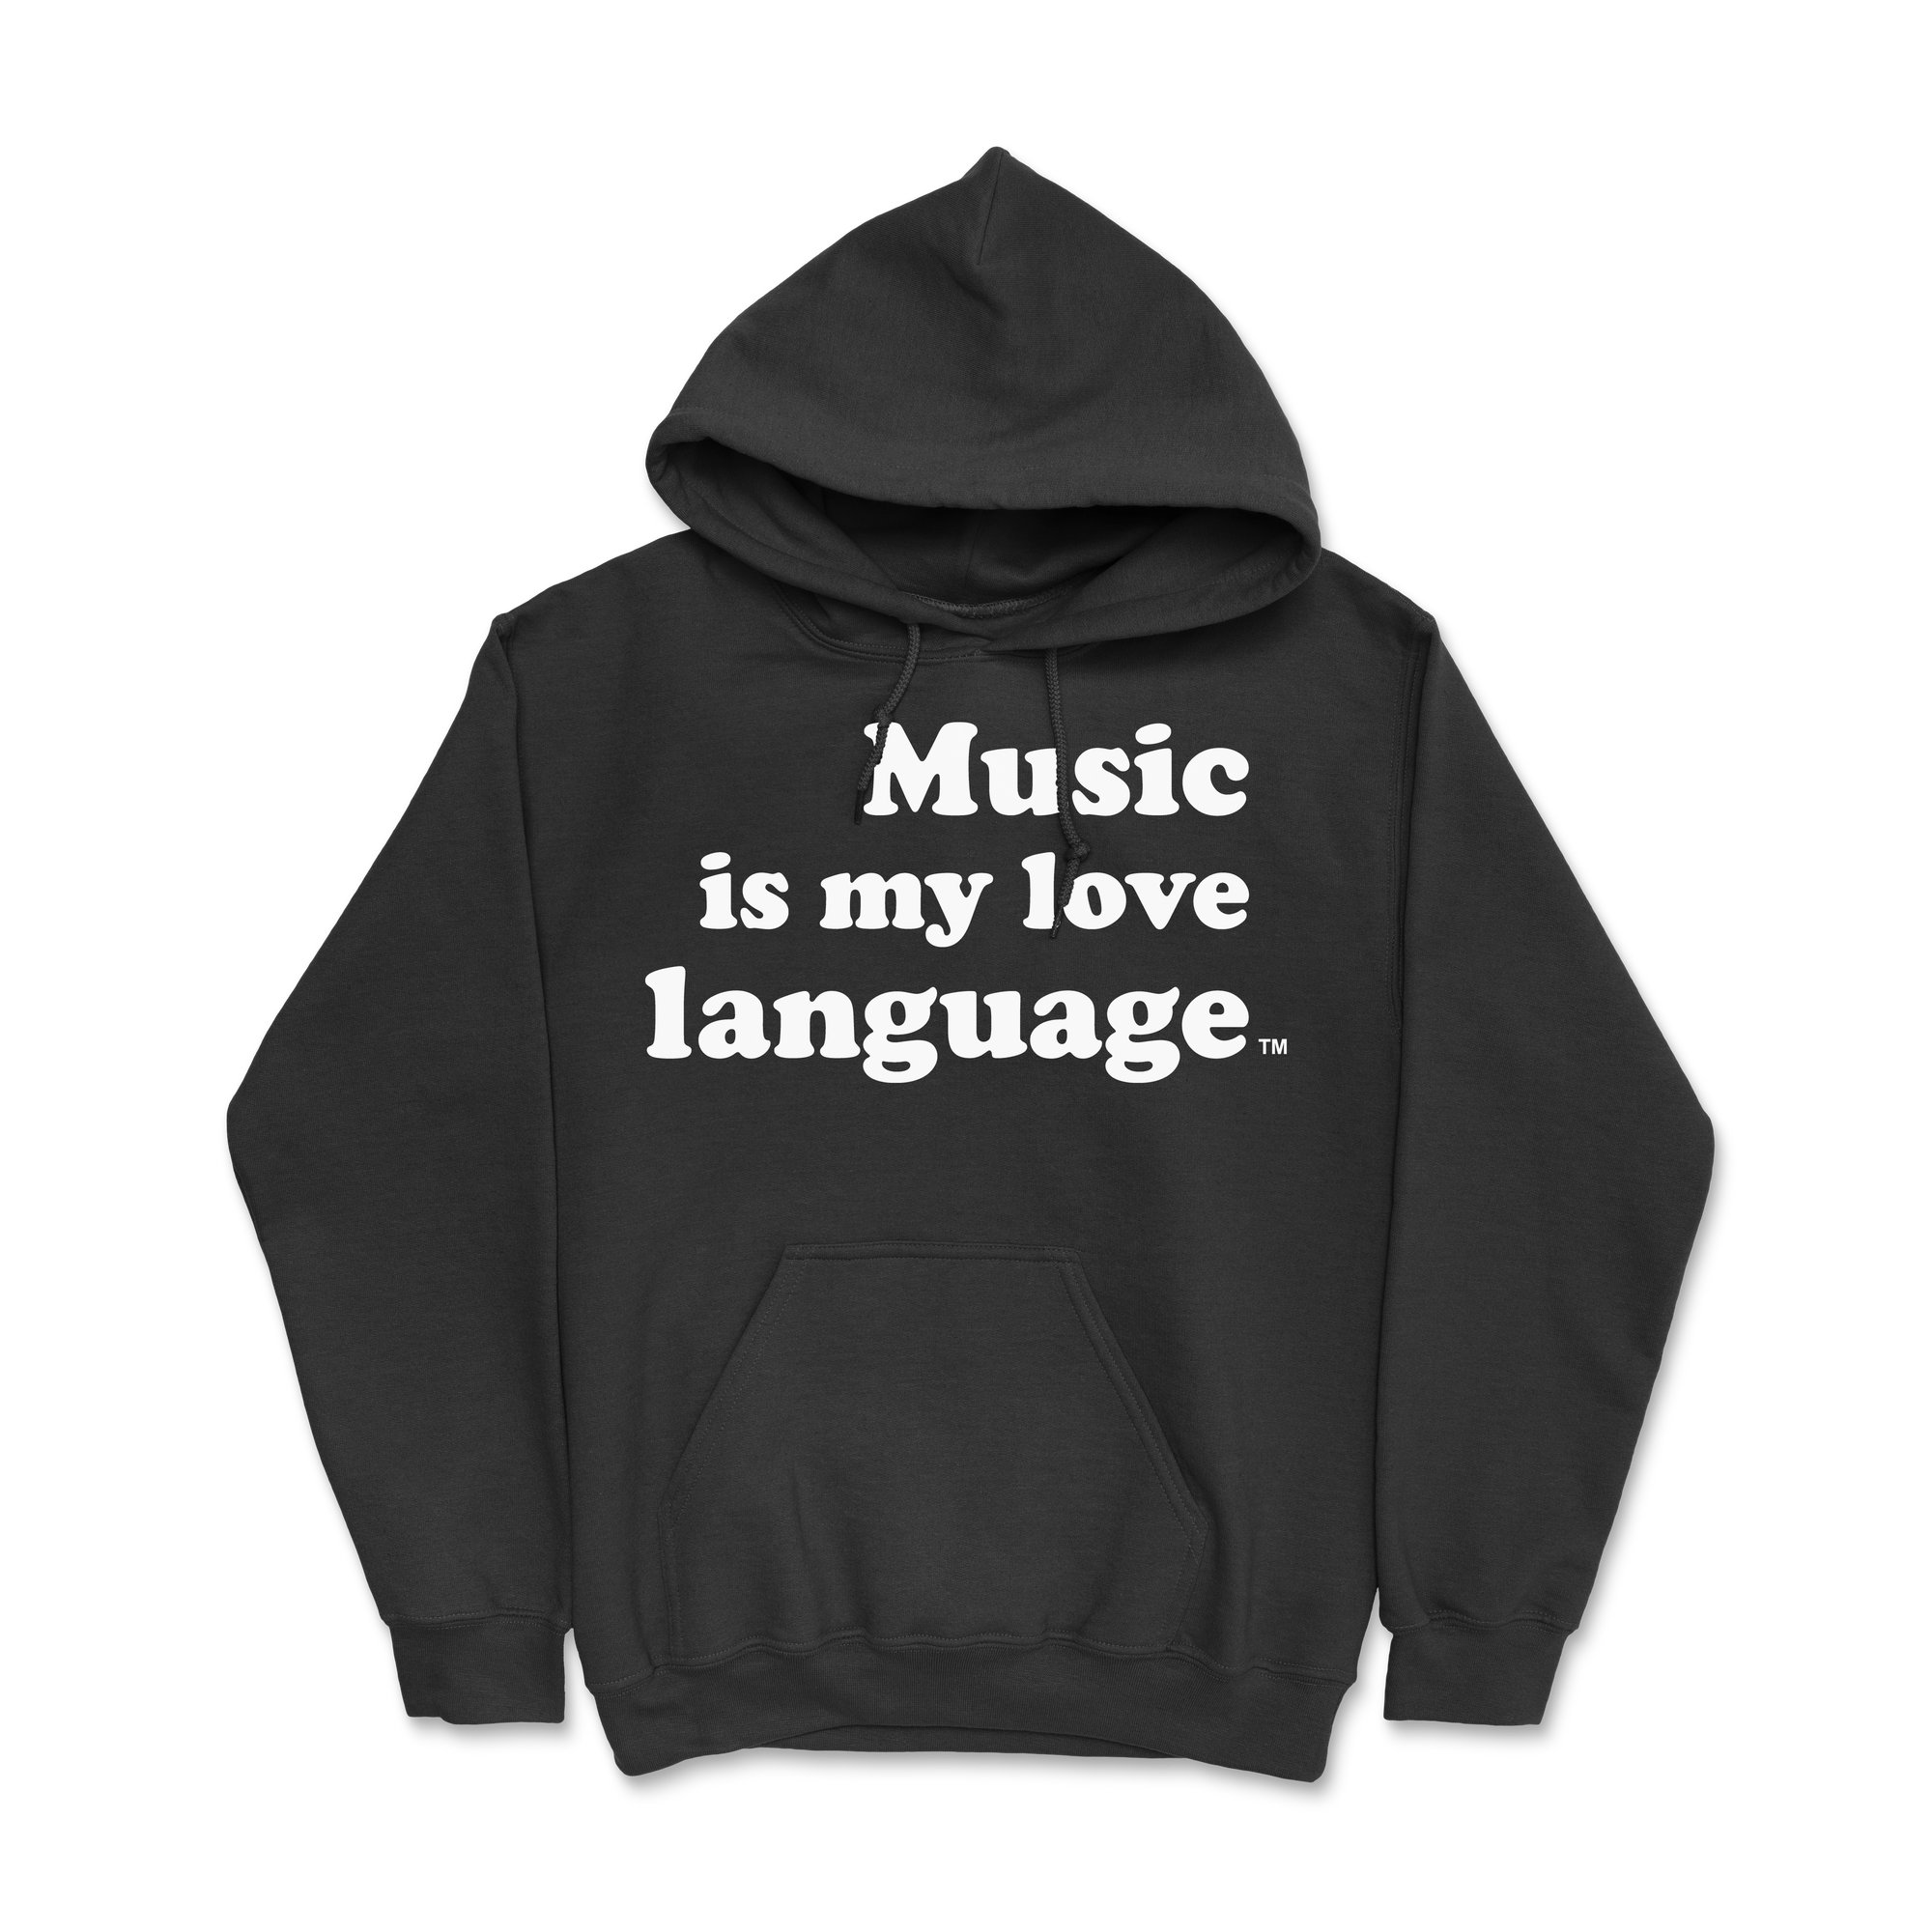 Music is my love language Hoodie